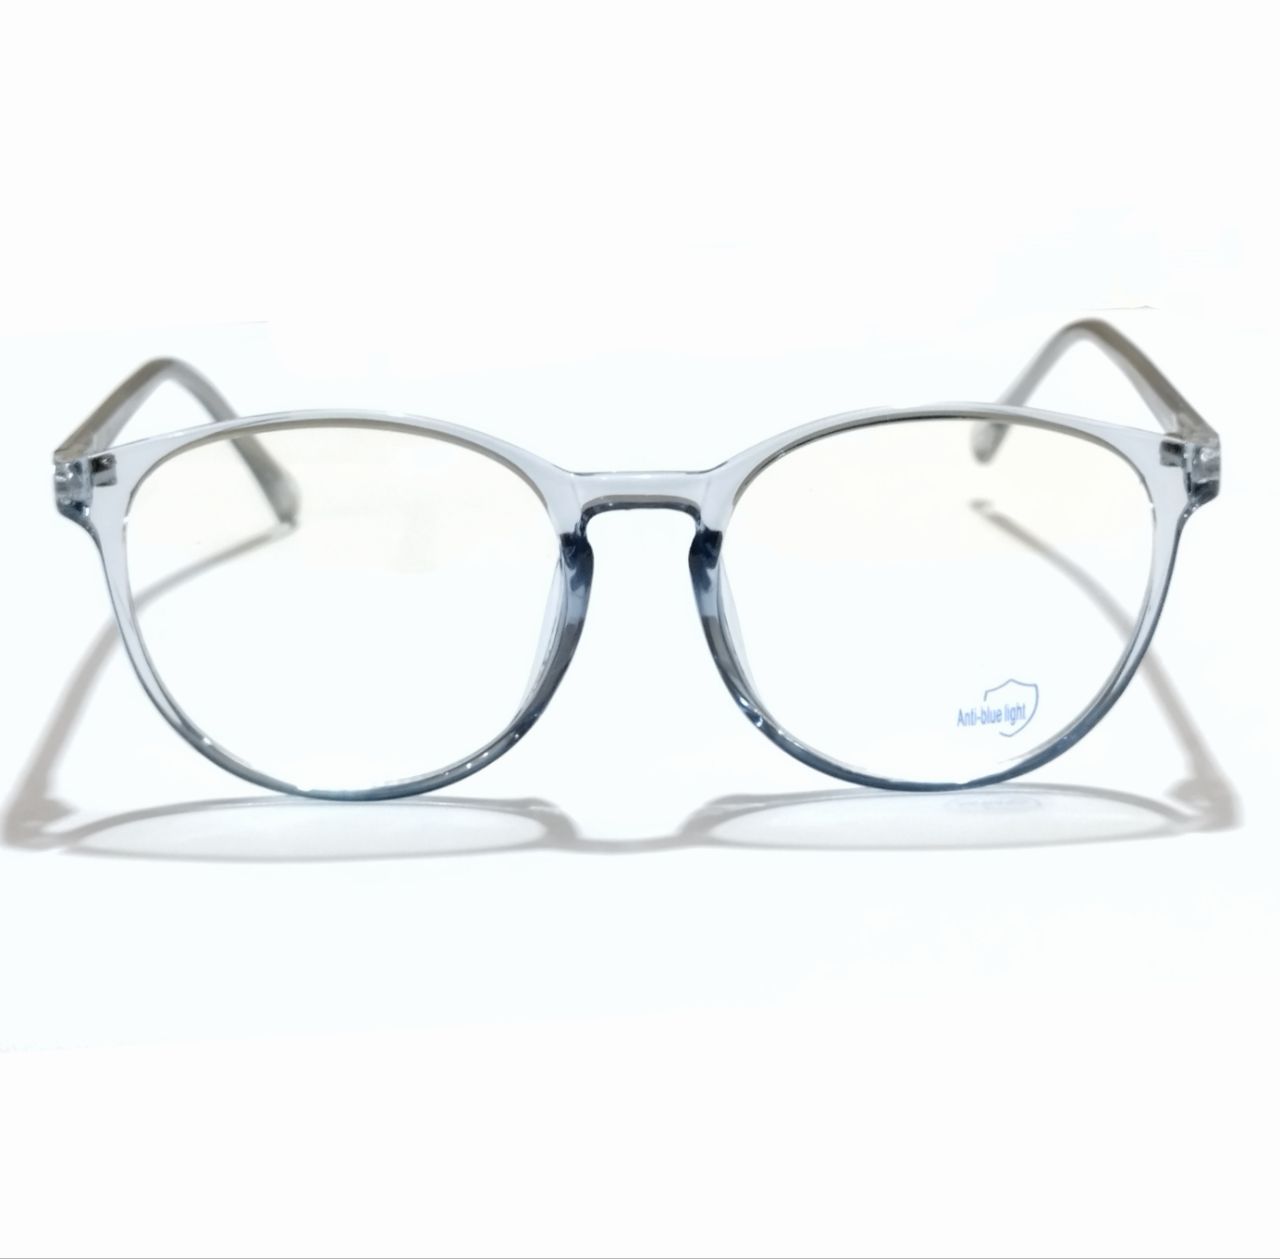 Transparent Blue Frame Round Glasses Computer Glasses for Men and Women M8555 C7